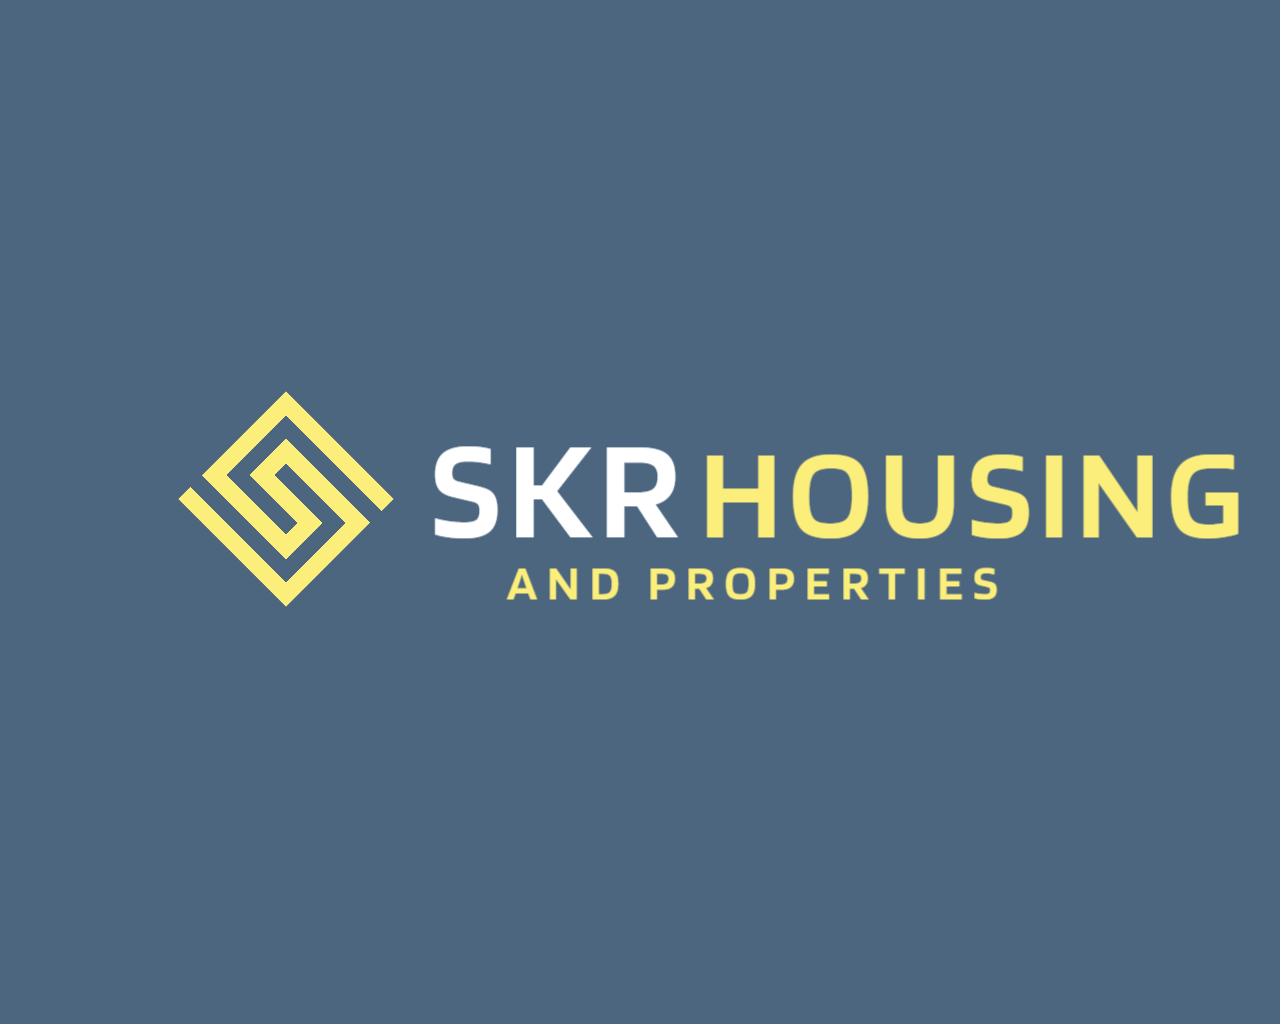 SKR Housing and Properties